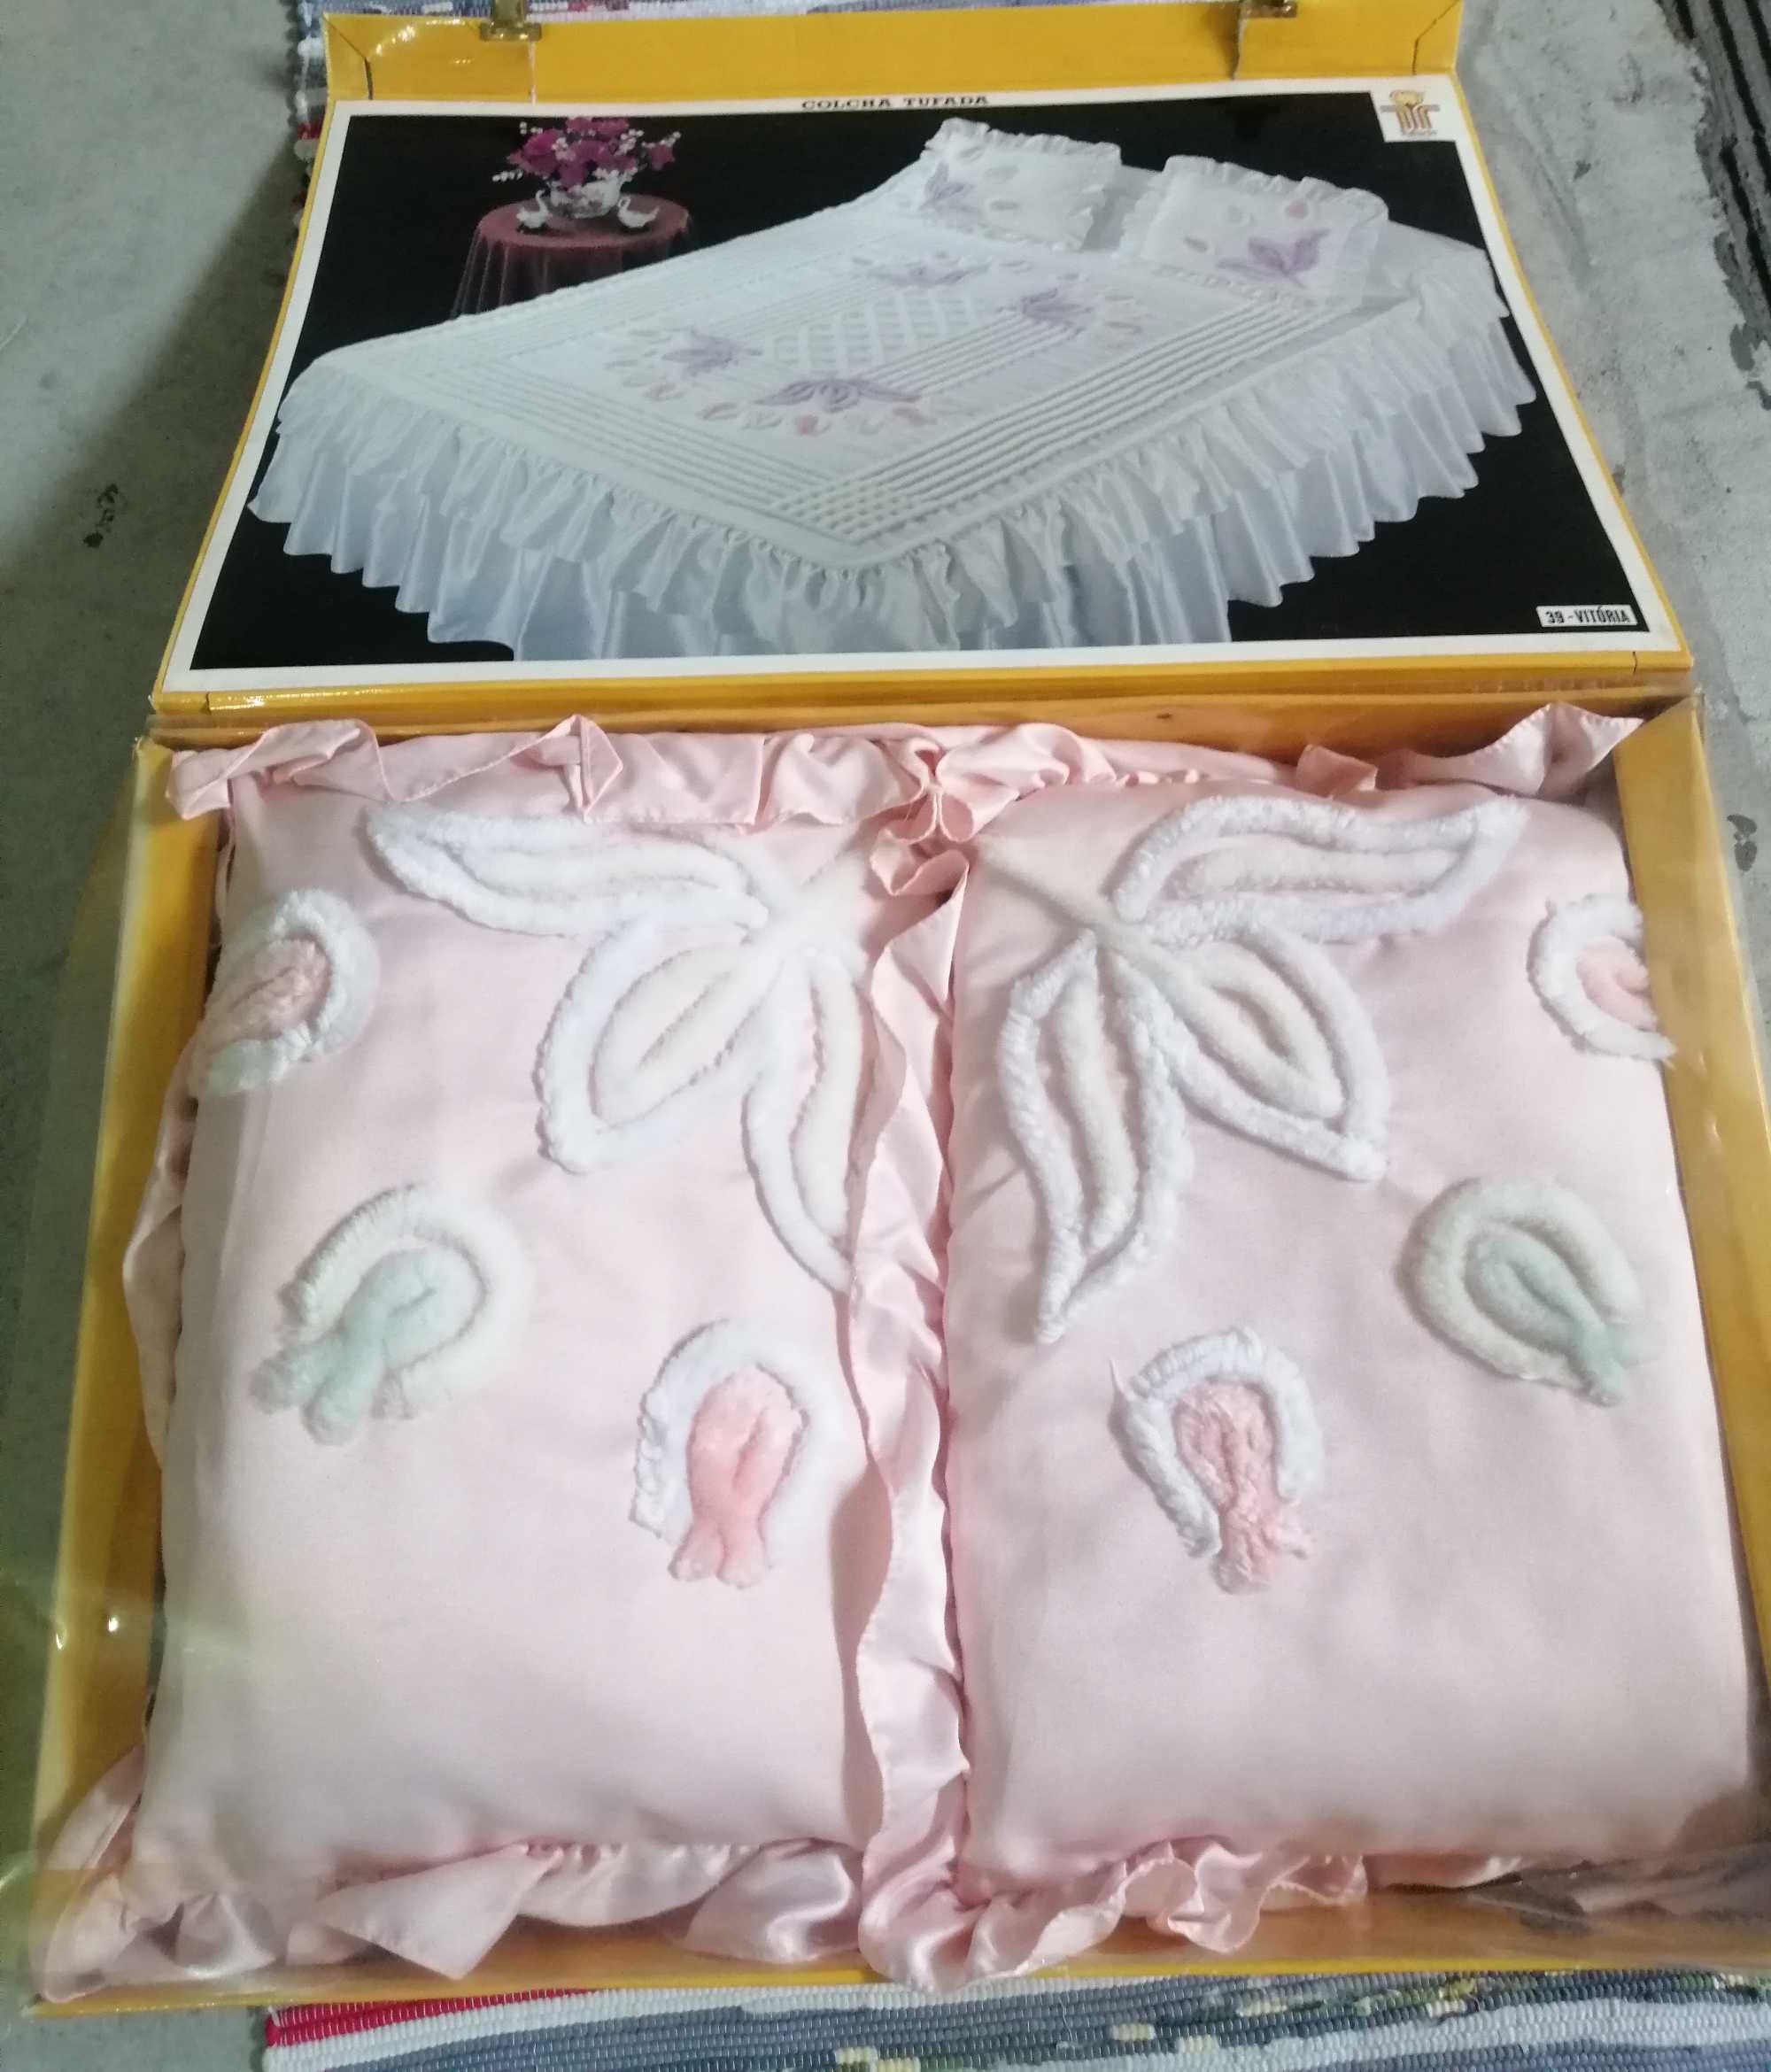 Colcha Tufarte - colcha tufada cor de rosa antiga (novo)